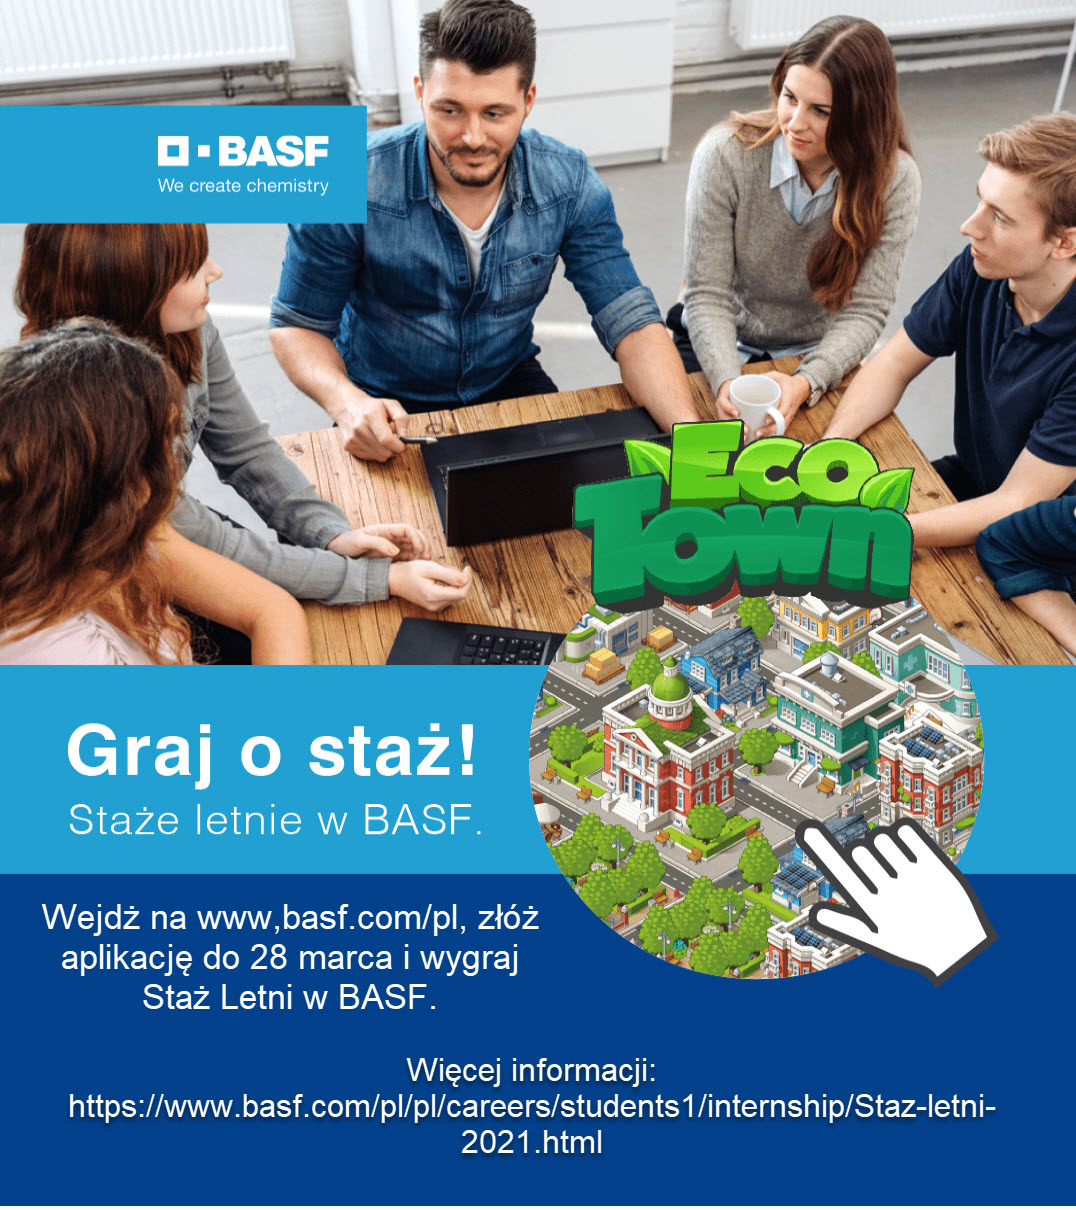 Graj o staż letni w BASF Polska!